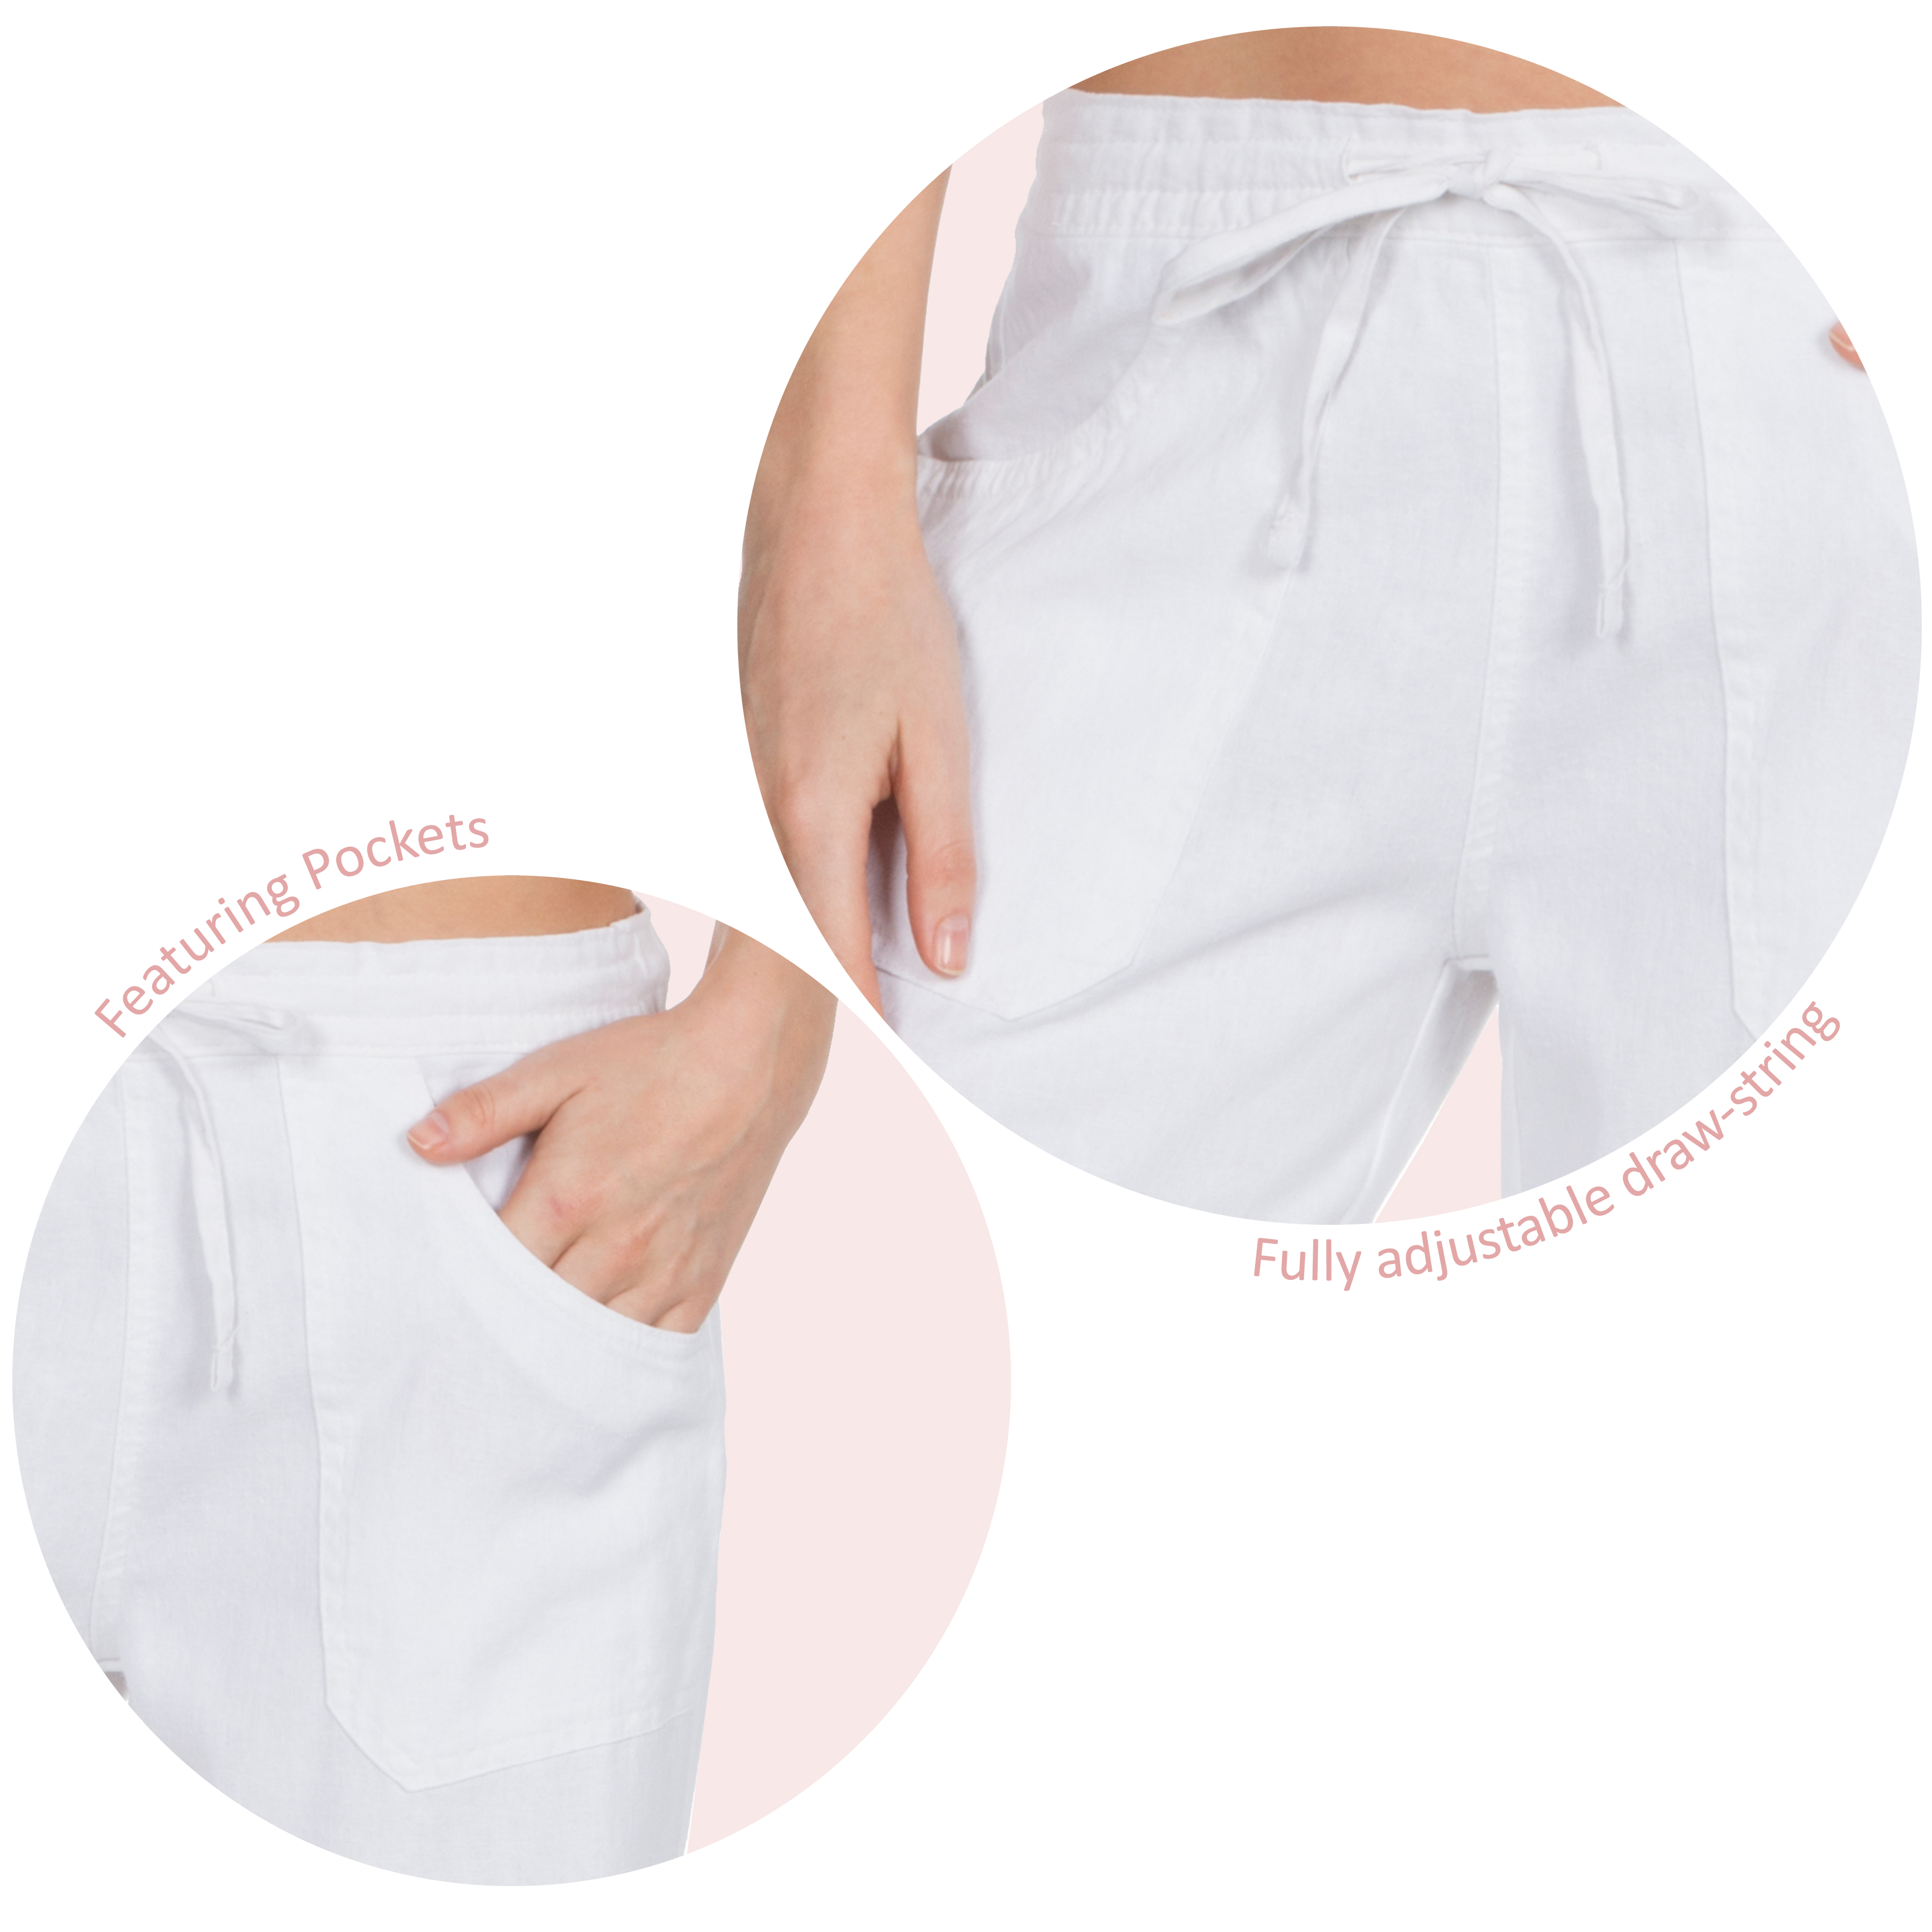 Metzuyan Womens Linen Trousers Wide Leg Fit Summer Pants Pockets 16-24 Plus  Size